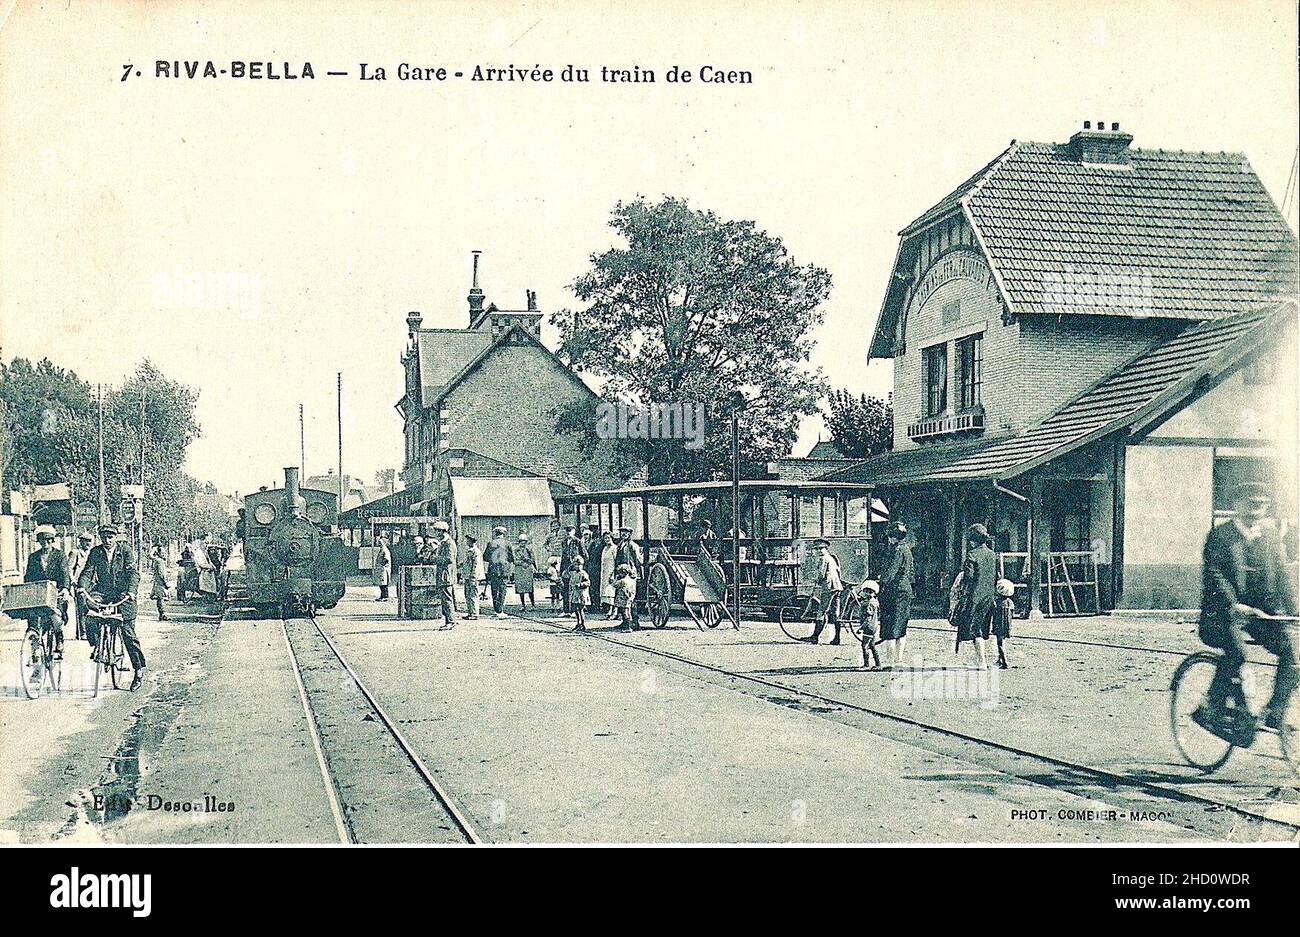 RIVA-BELLA - la Gare - Arrivée du train de Caen. Banque D'Images